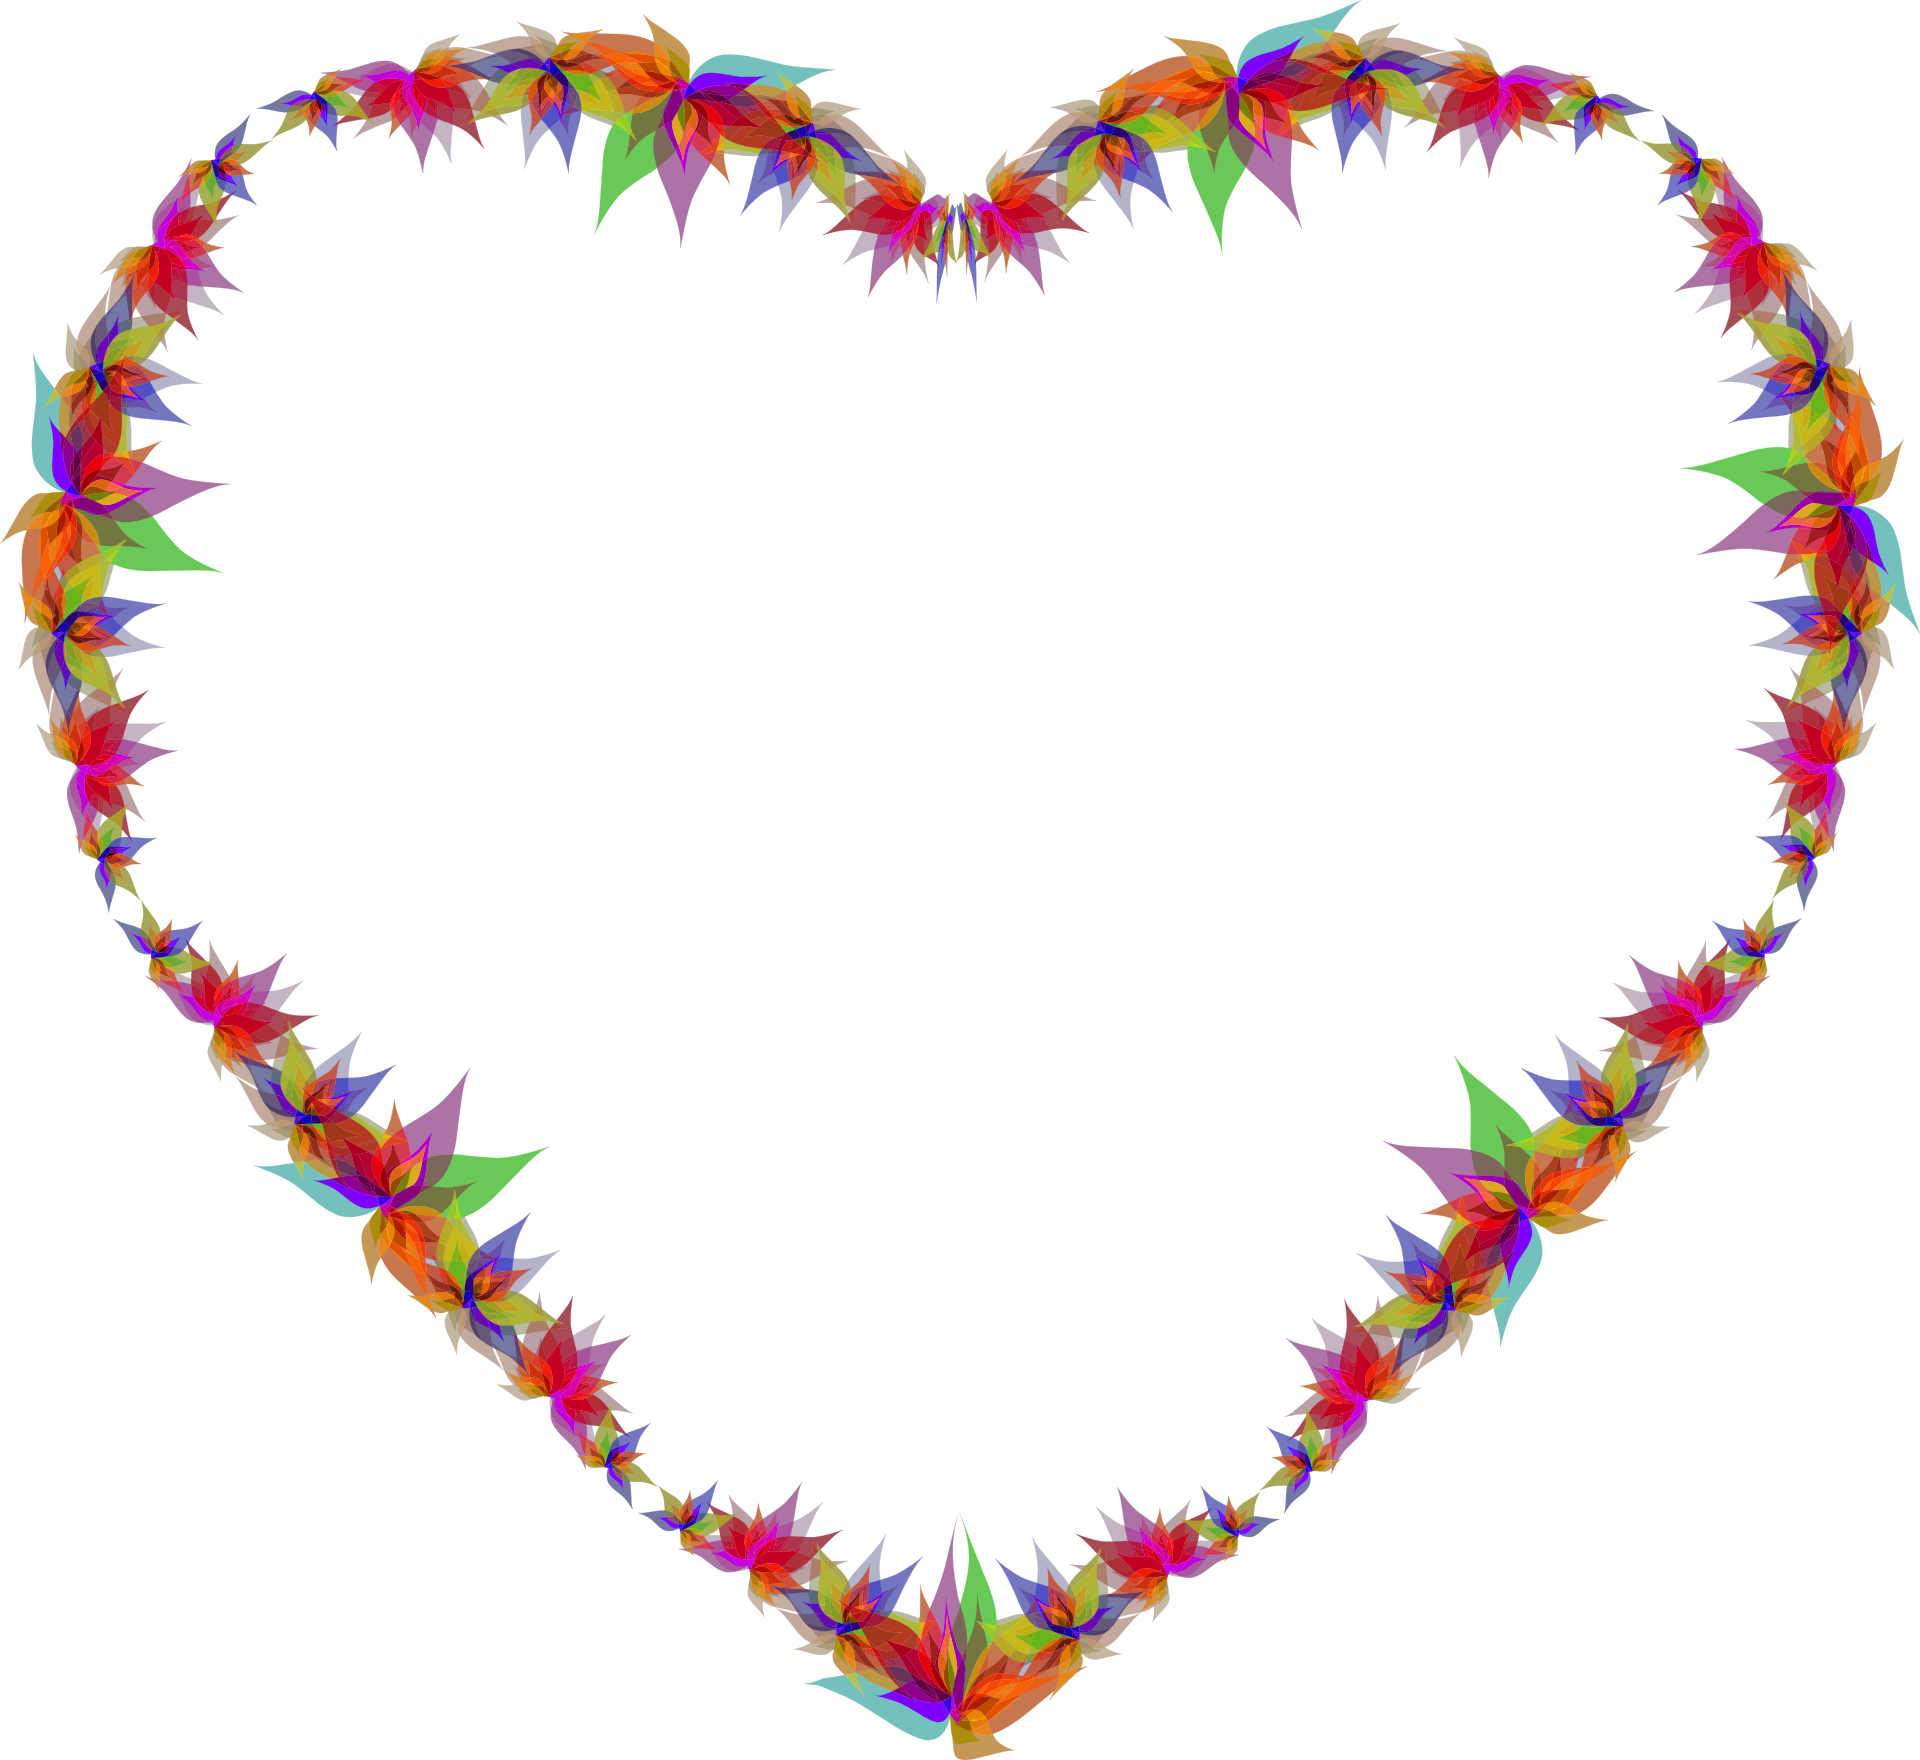 Download PNG image - Red Vector Flower Heart PNG Transparent Image 